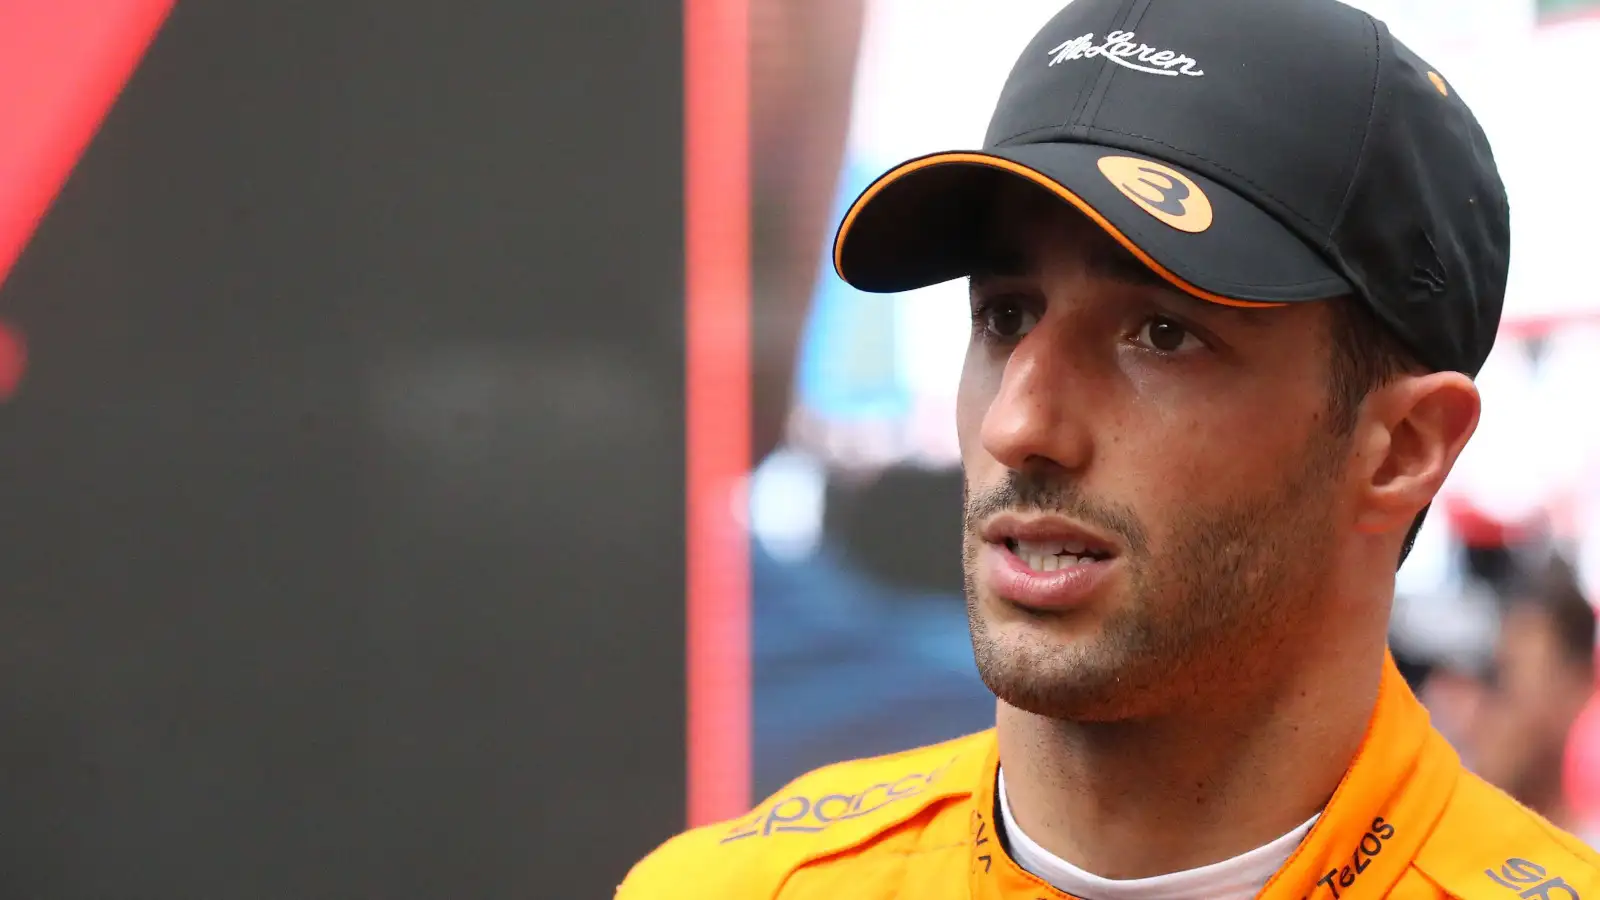 Daniel Ricciardo of McLaren looks stressed after qualifying. Monaco May 2022